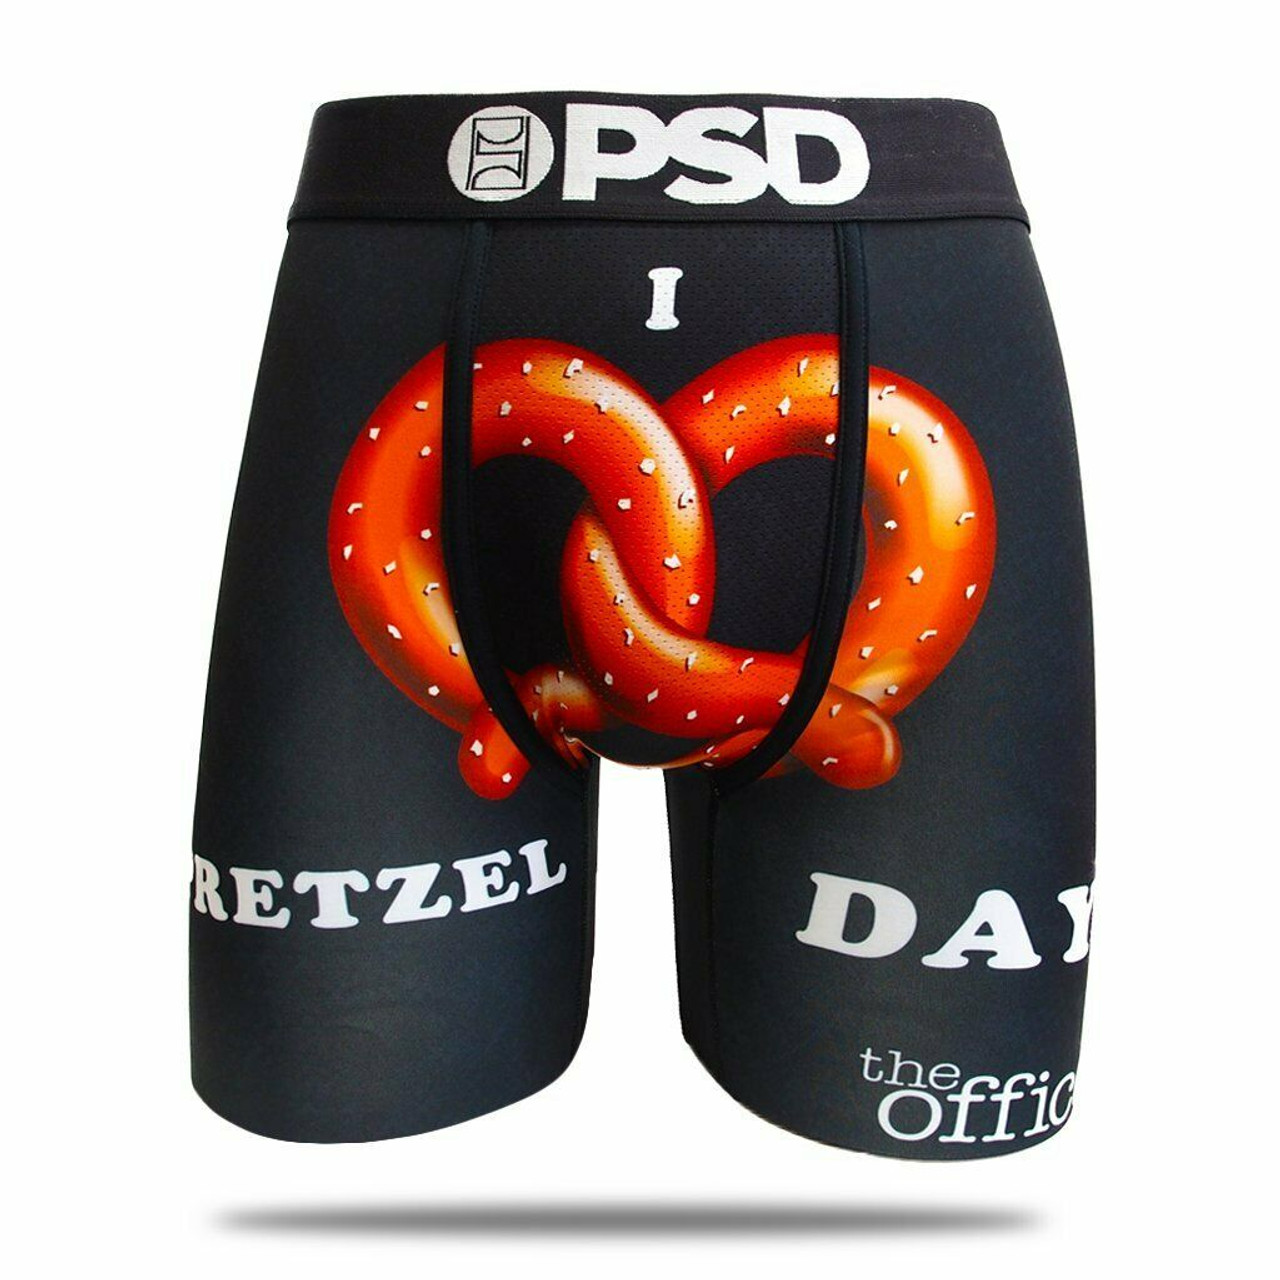 PSD The Office Pretzel Day Comedy TV Show Boxer Briefs Underwear E11911038  - Fearless Apparel